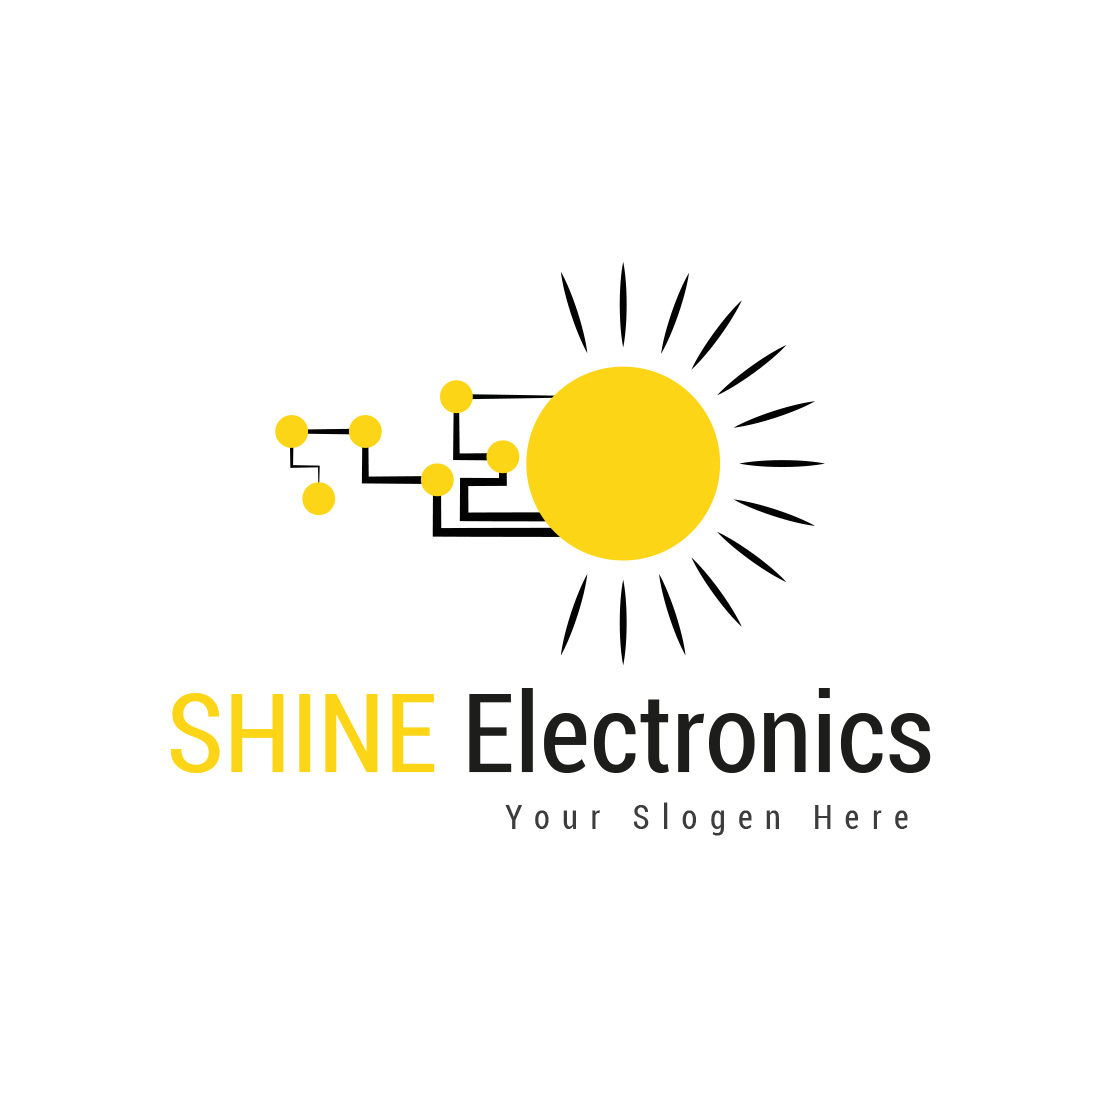 Electronics + solar system ( Logo design ) cover image.